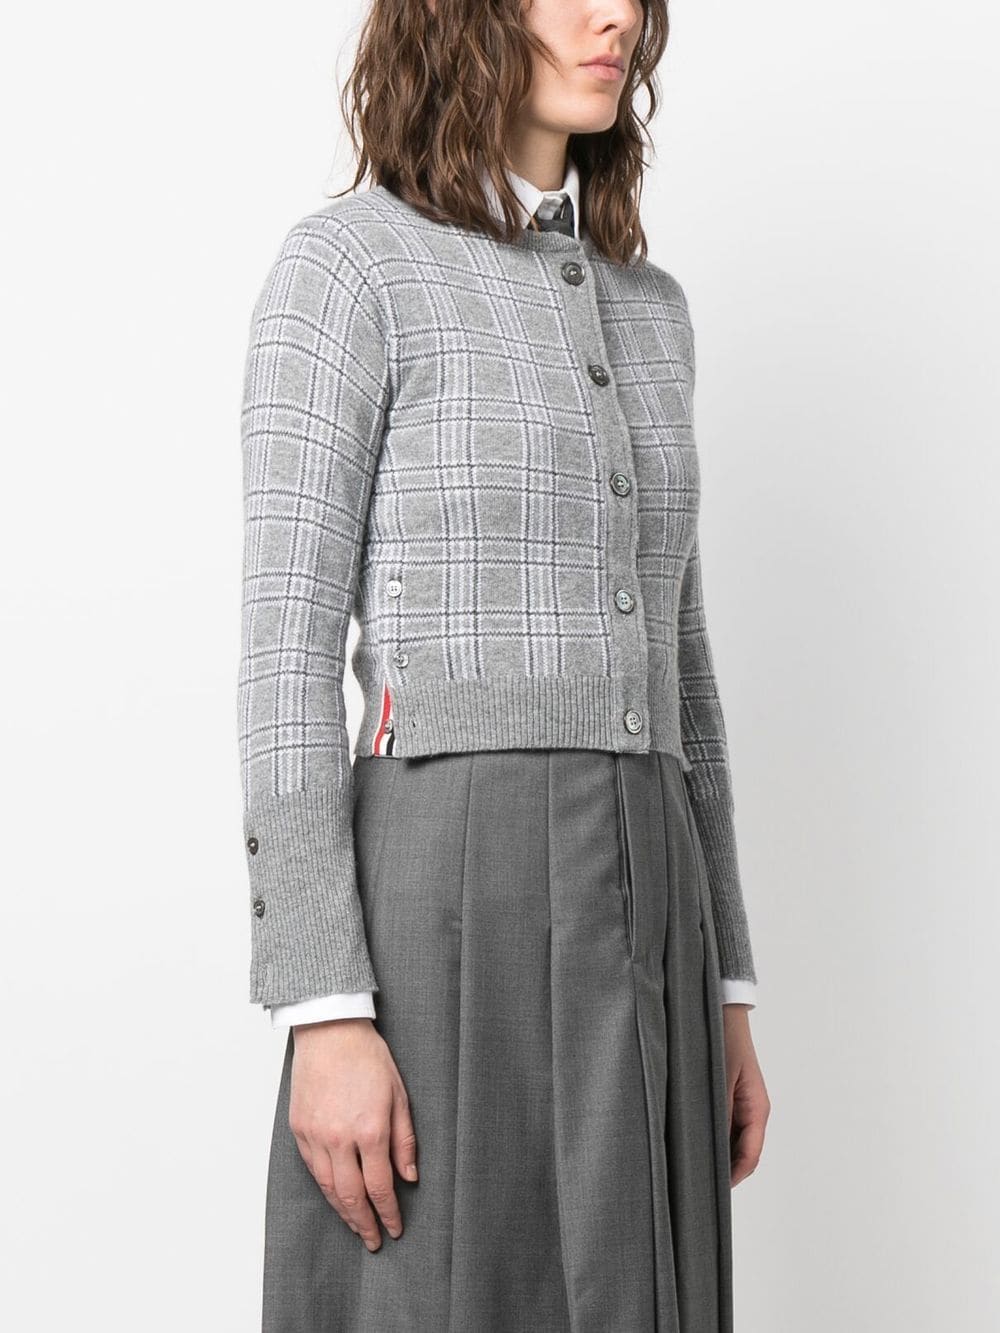 Thom Browne - Multi-Color Ribbon Tweed Frayed Variegated Rep Stripe Unconstructed Box Pleat Raglan Sleeve Jacket - 40 - White - Female